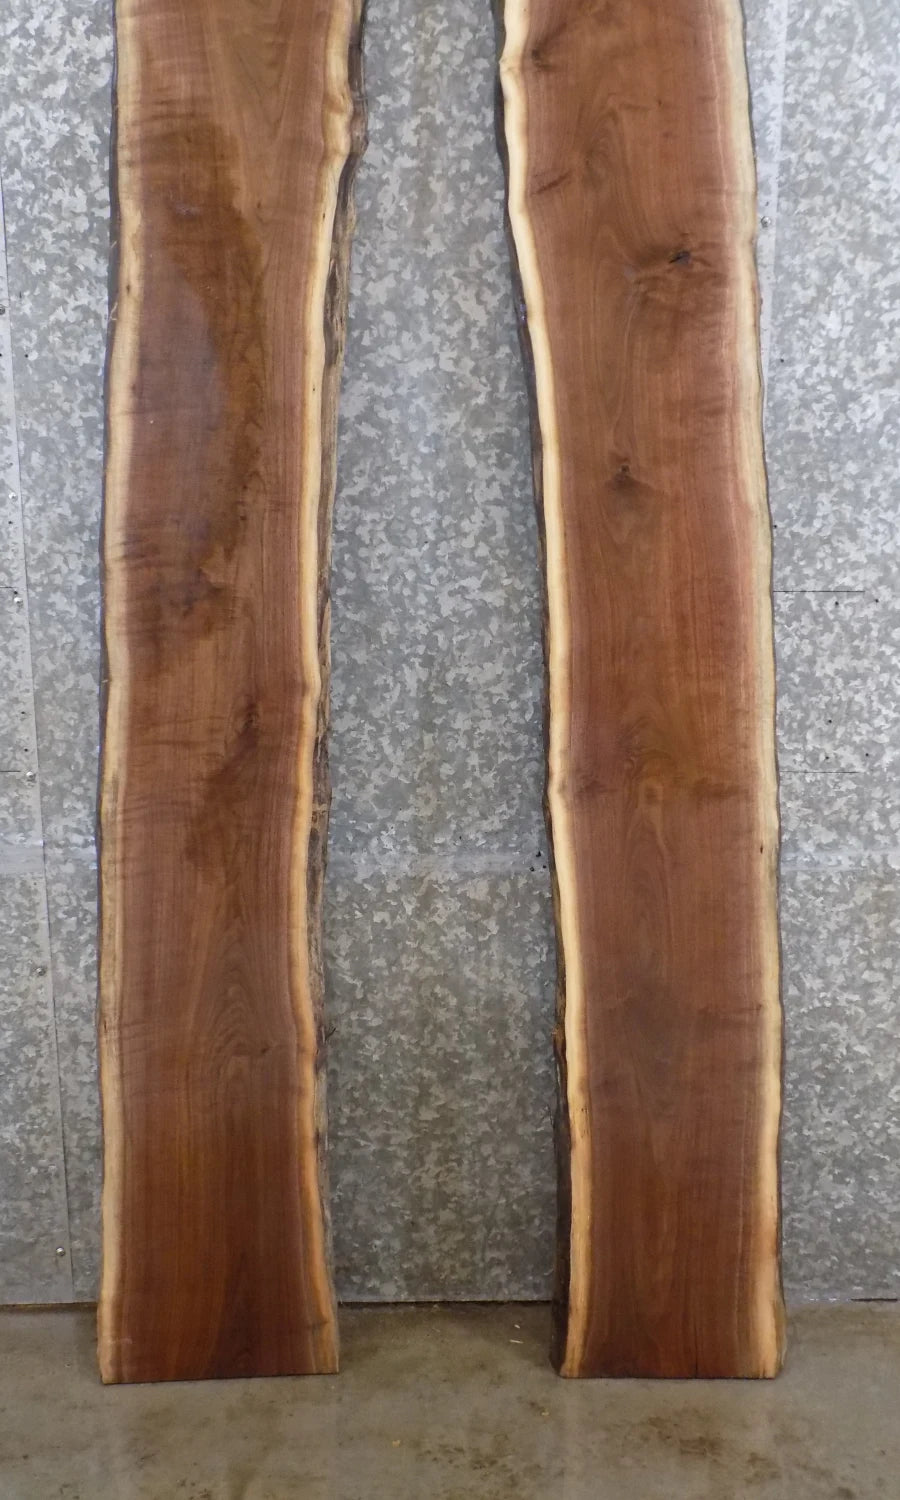 2- Live Edge Black Walnut River Table/Bar Top Wood Slabs 1019-1020